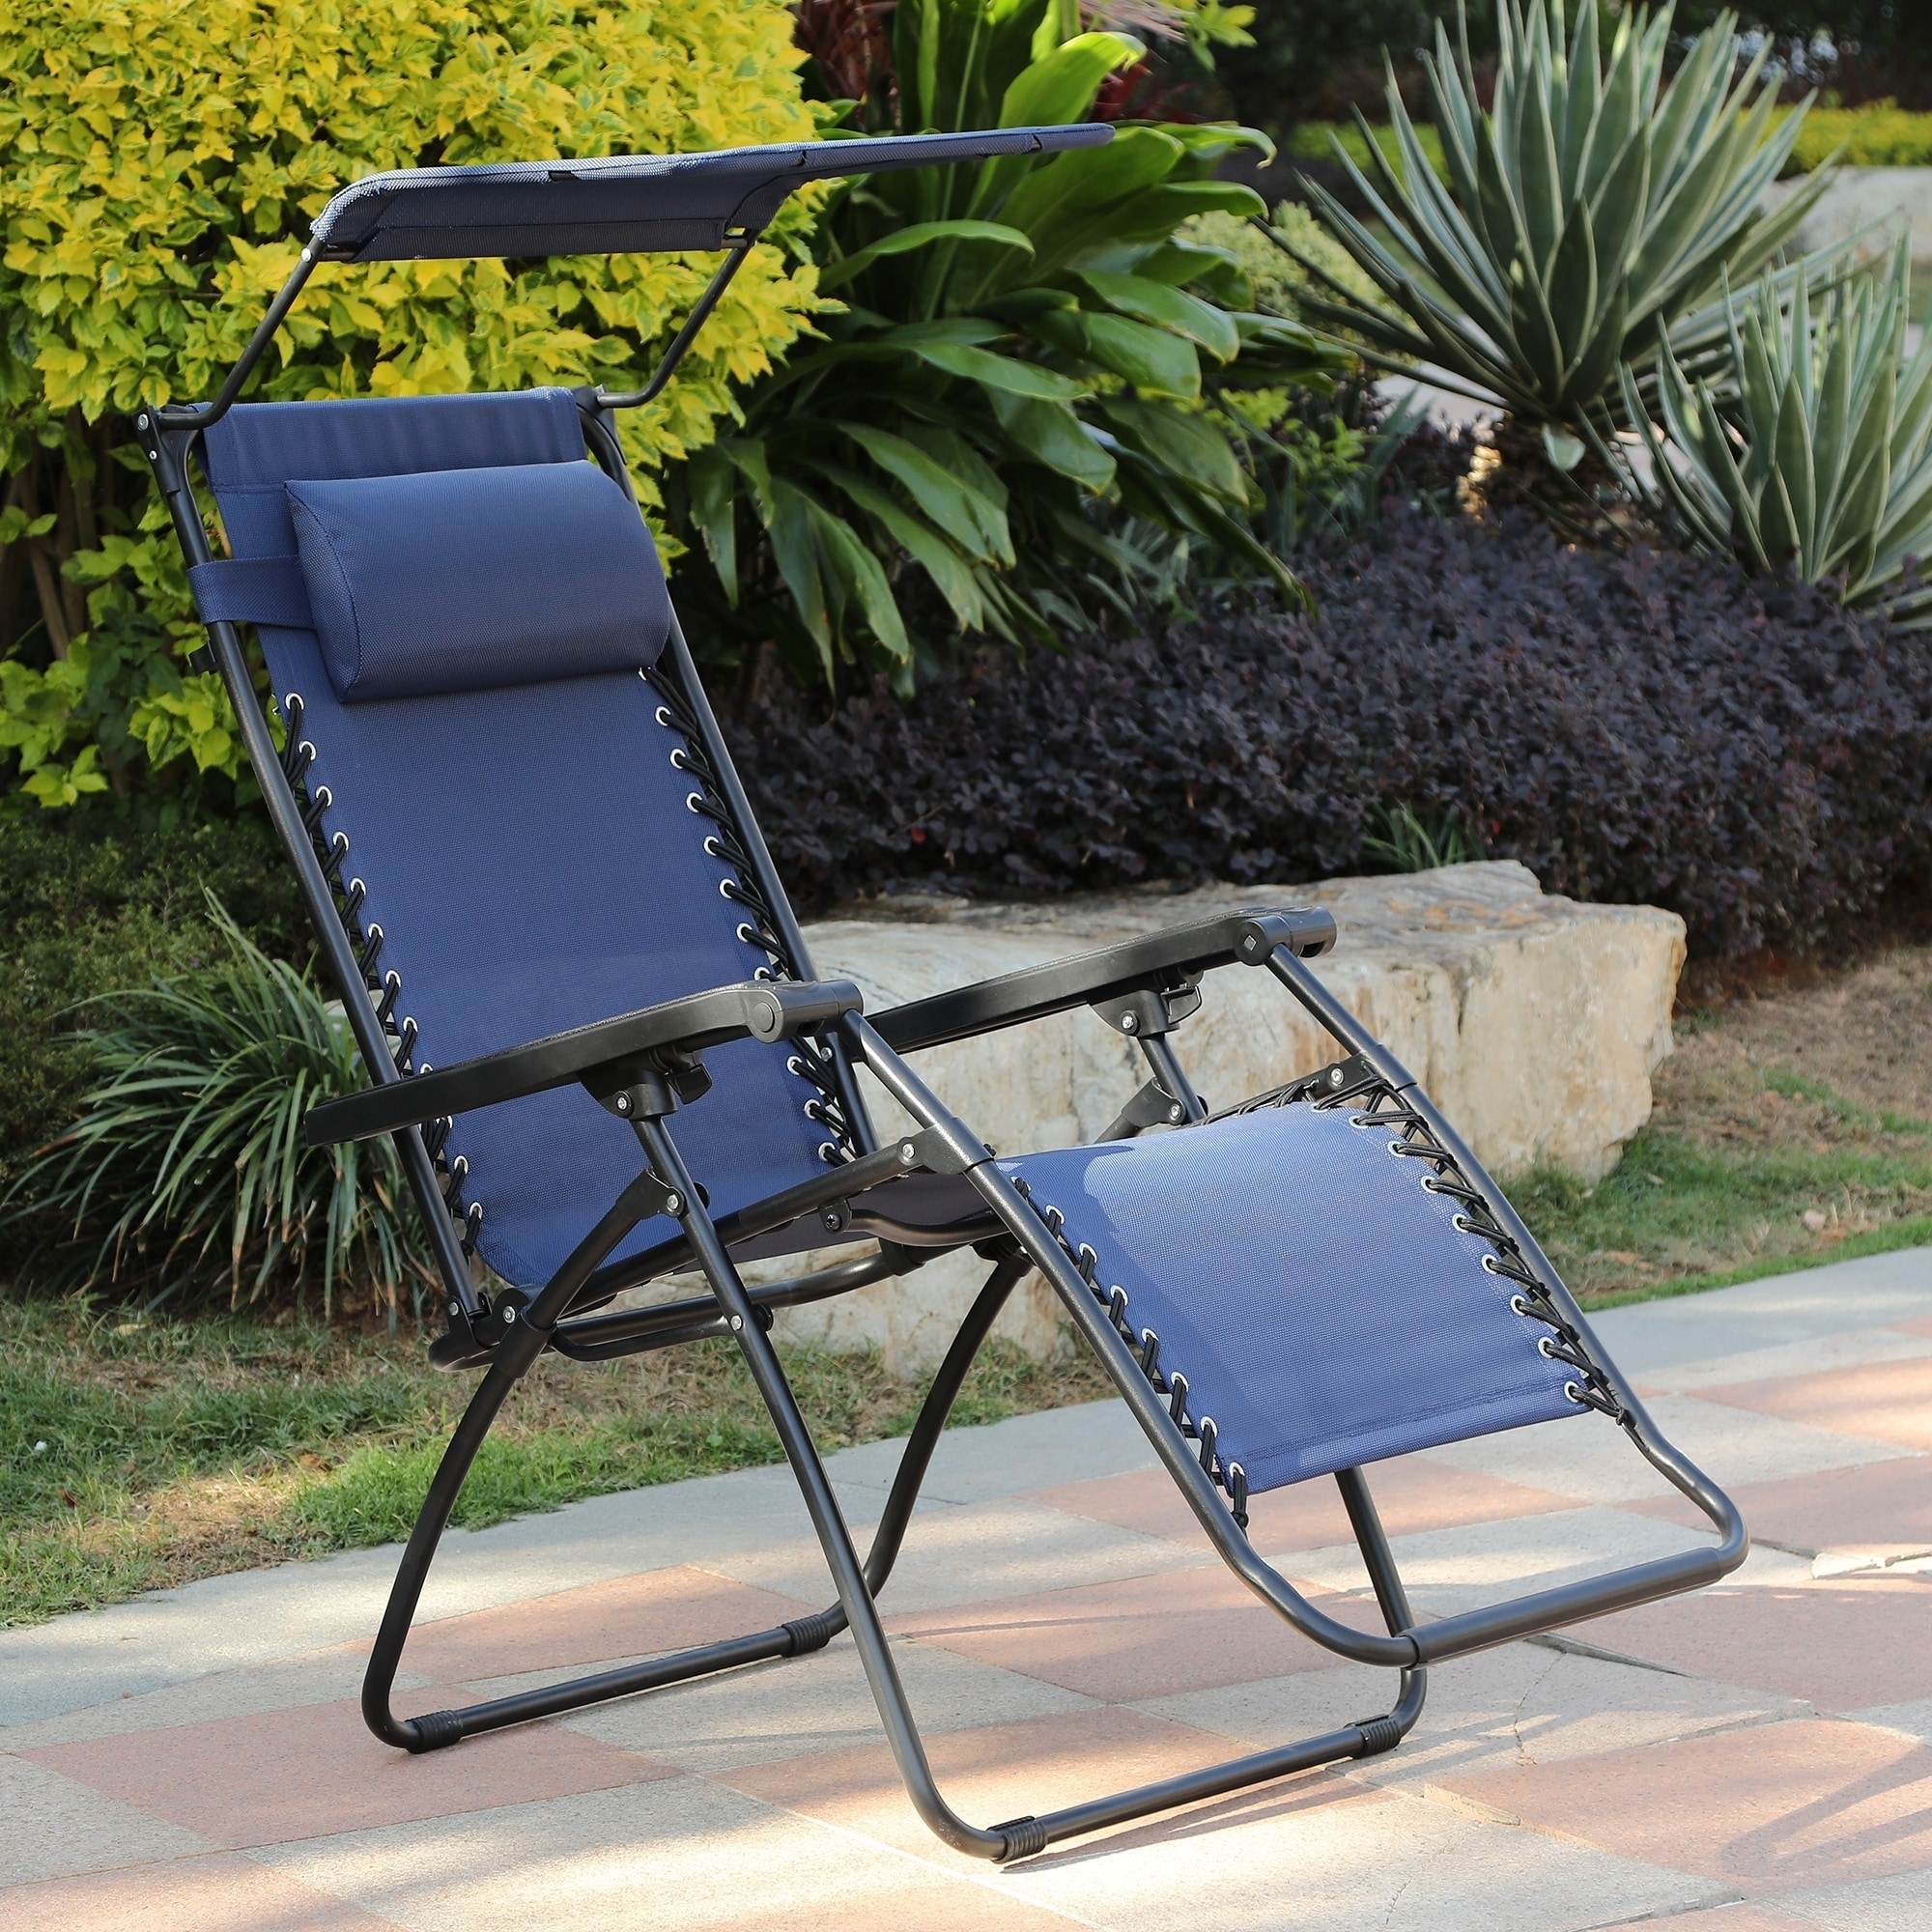 Zero Gravity Chair with Canopy | eBay